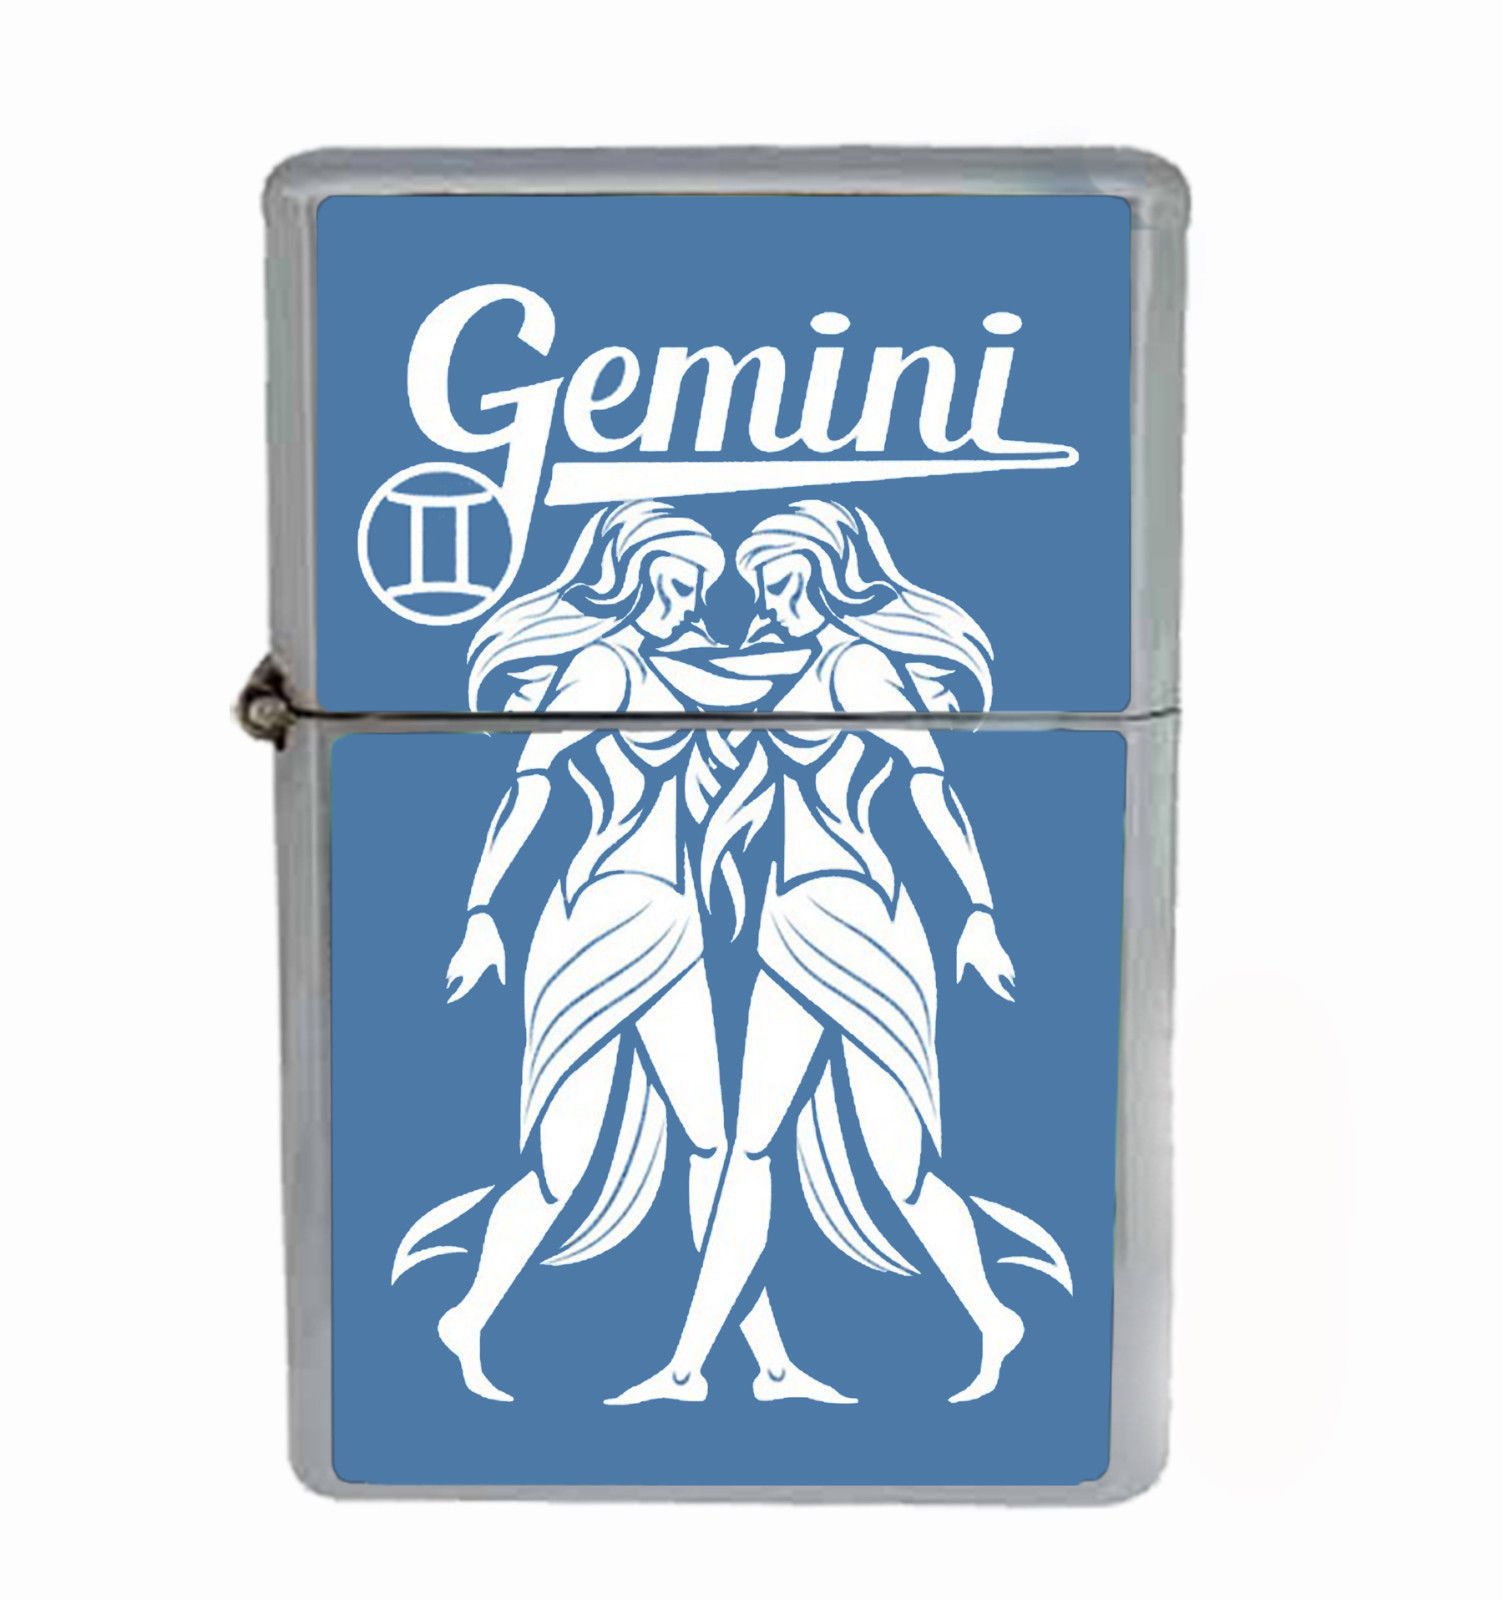 Primary image for Gemini Rs1 Flip Top Oil Lighter Wind Resistant